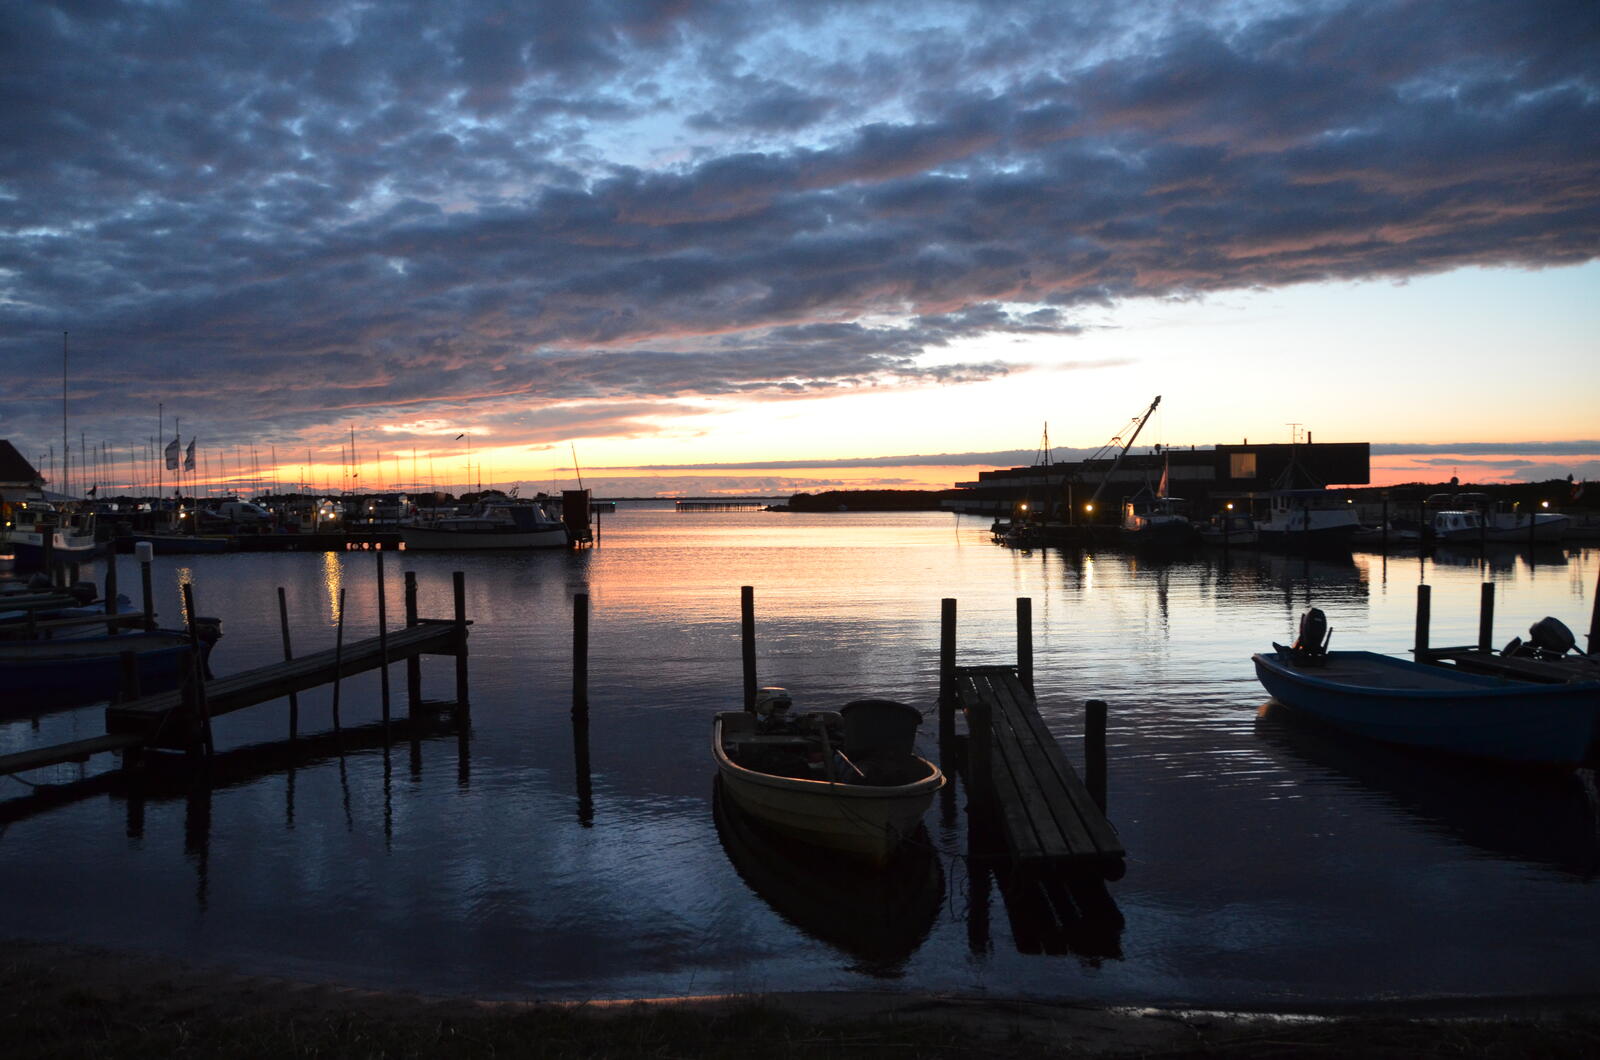 Бесплатное фото Порт с лодками в Дании